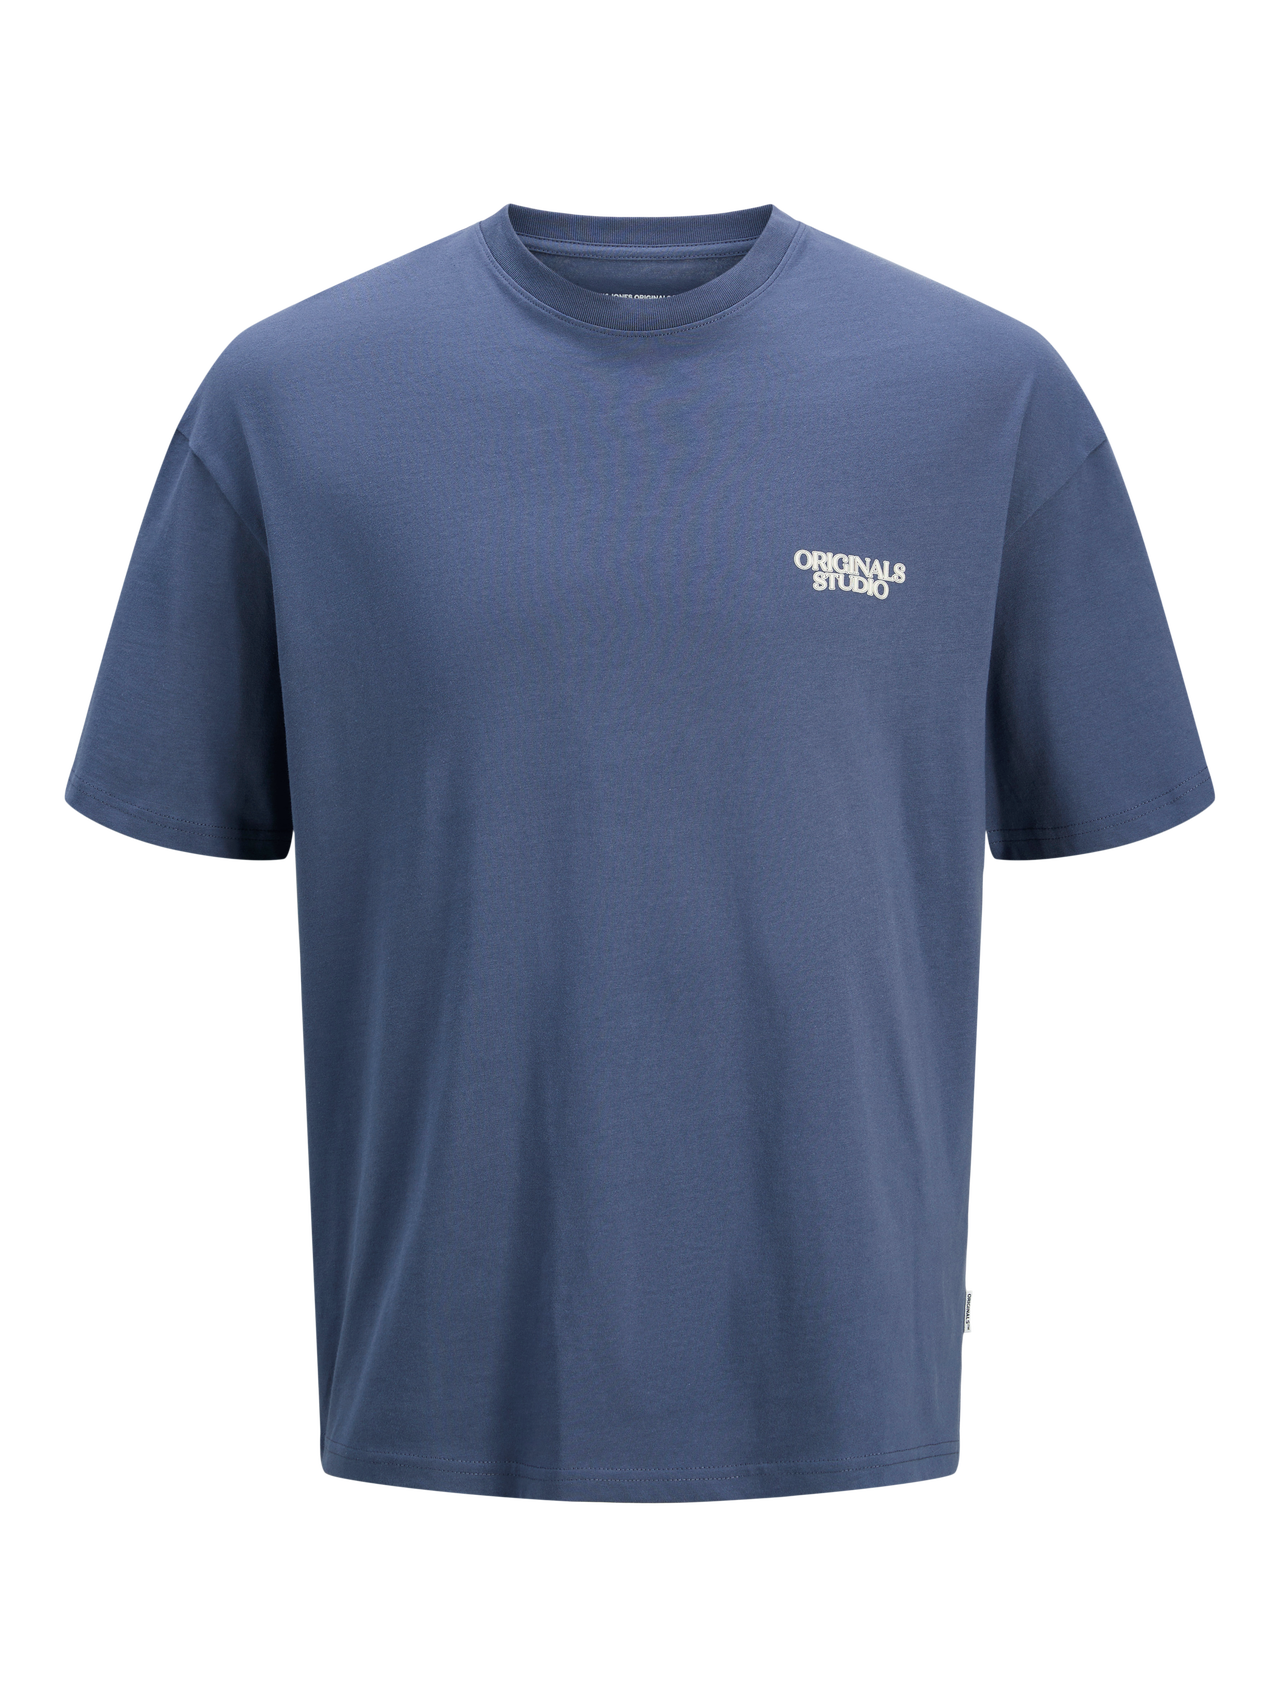 Jack & Jones Printed Crew neck T-shirt -Nightshadow Blue - 12262501